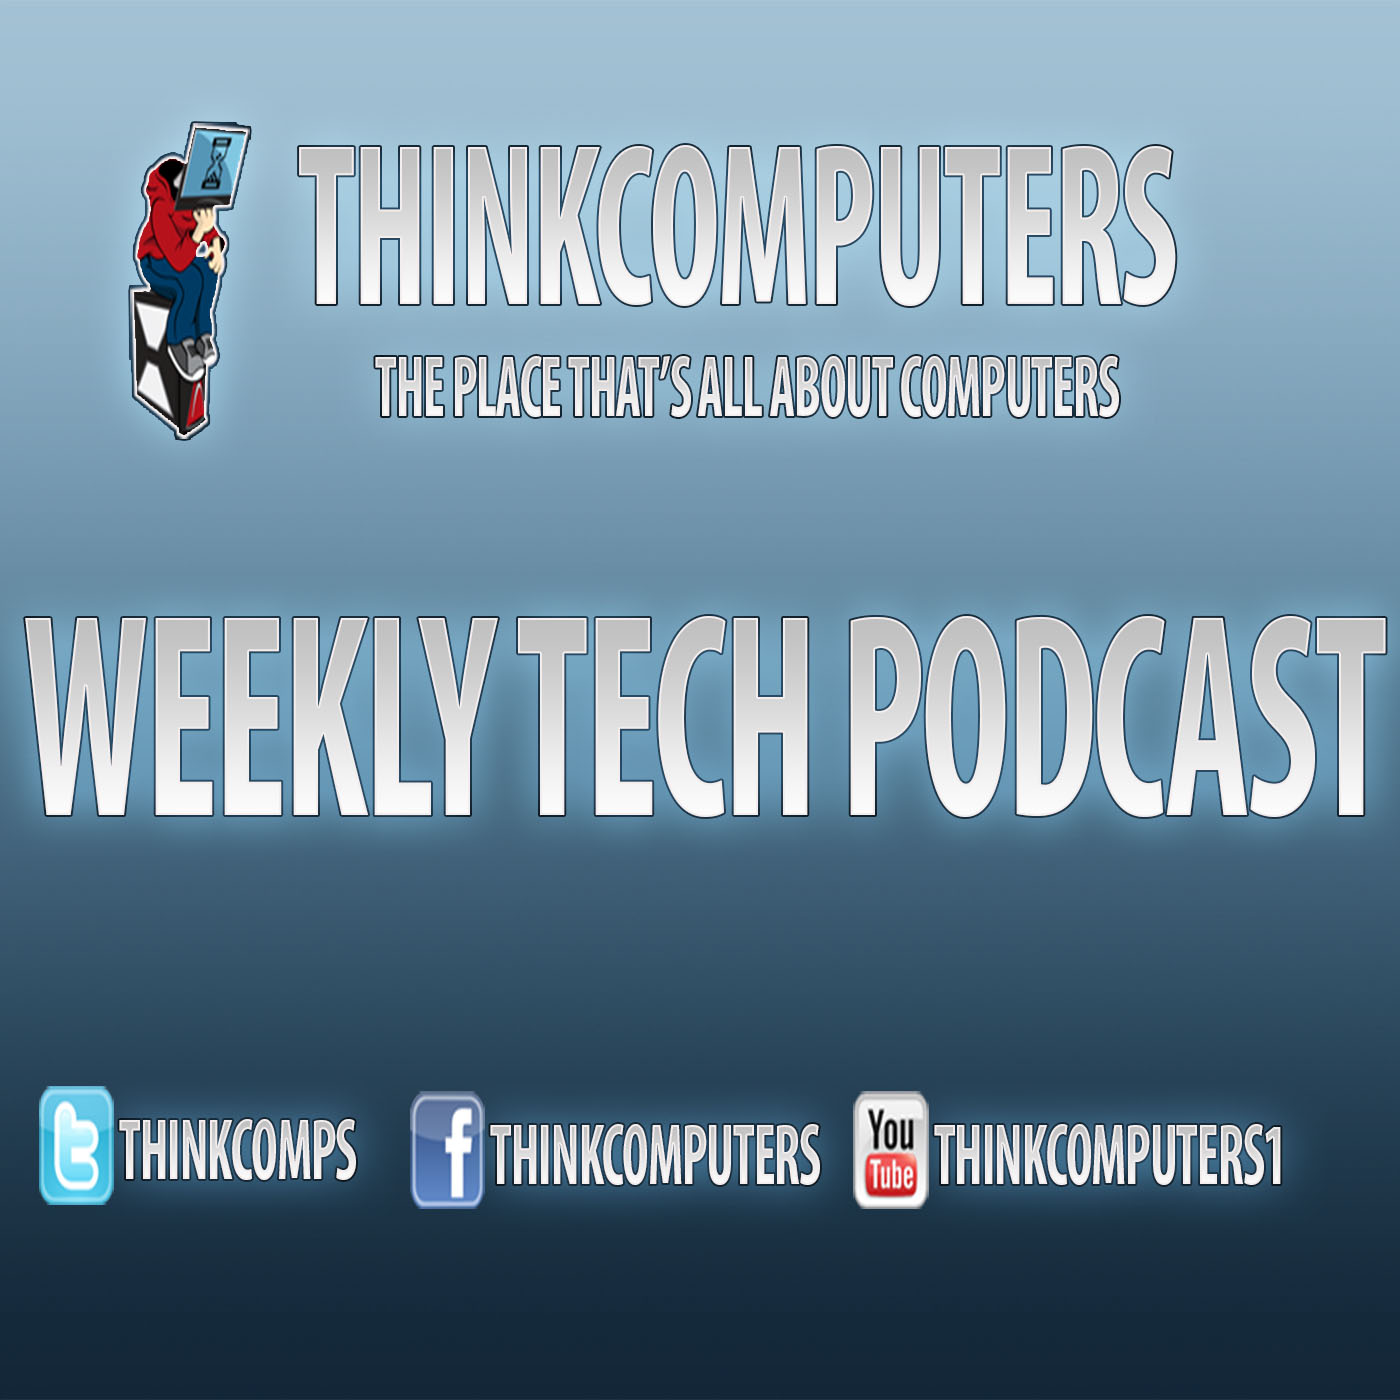 ThinkComputers Weekly Tech Podcast